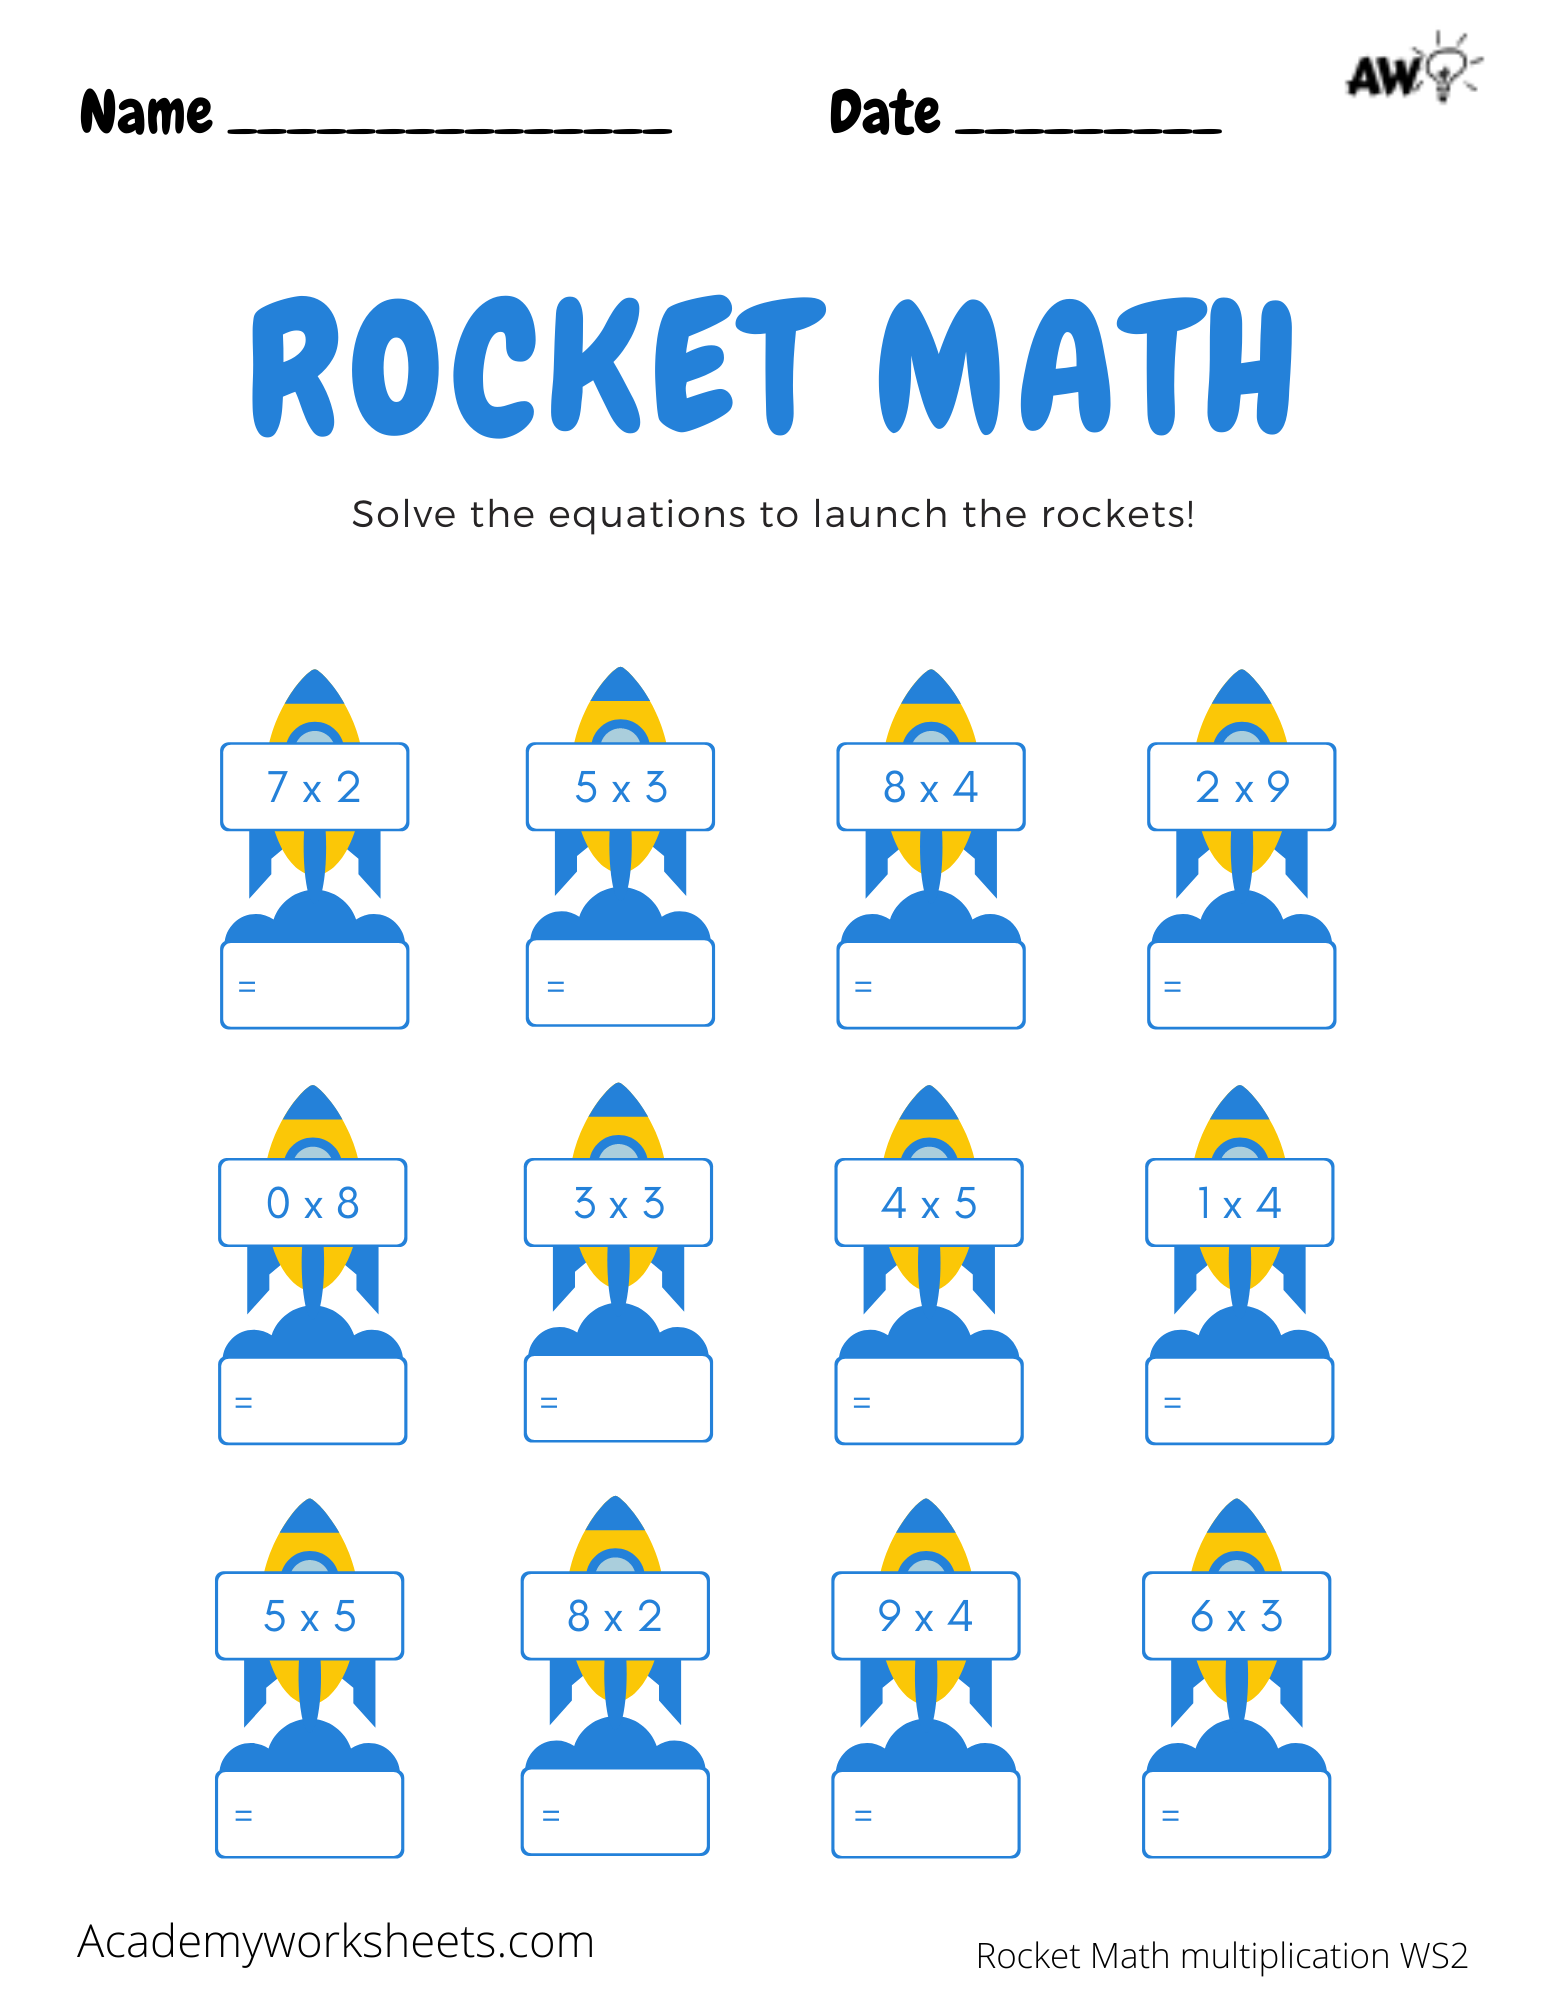 Free Rocket Math Multiplication Worksheets